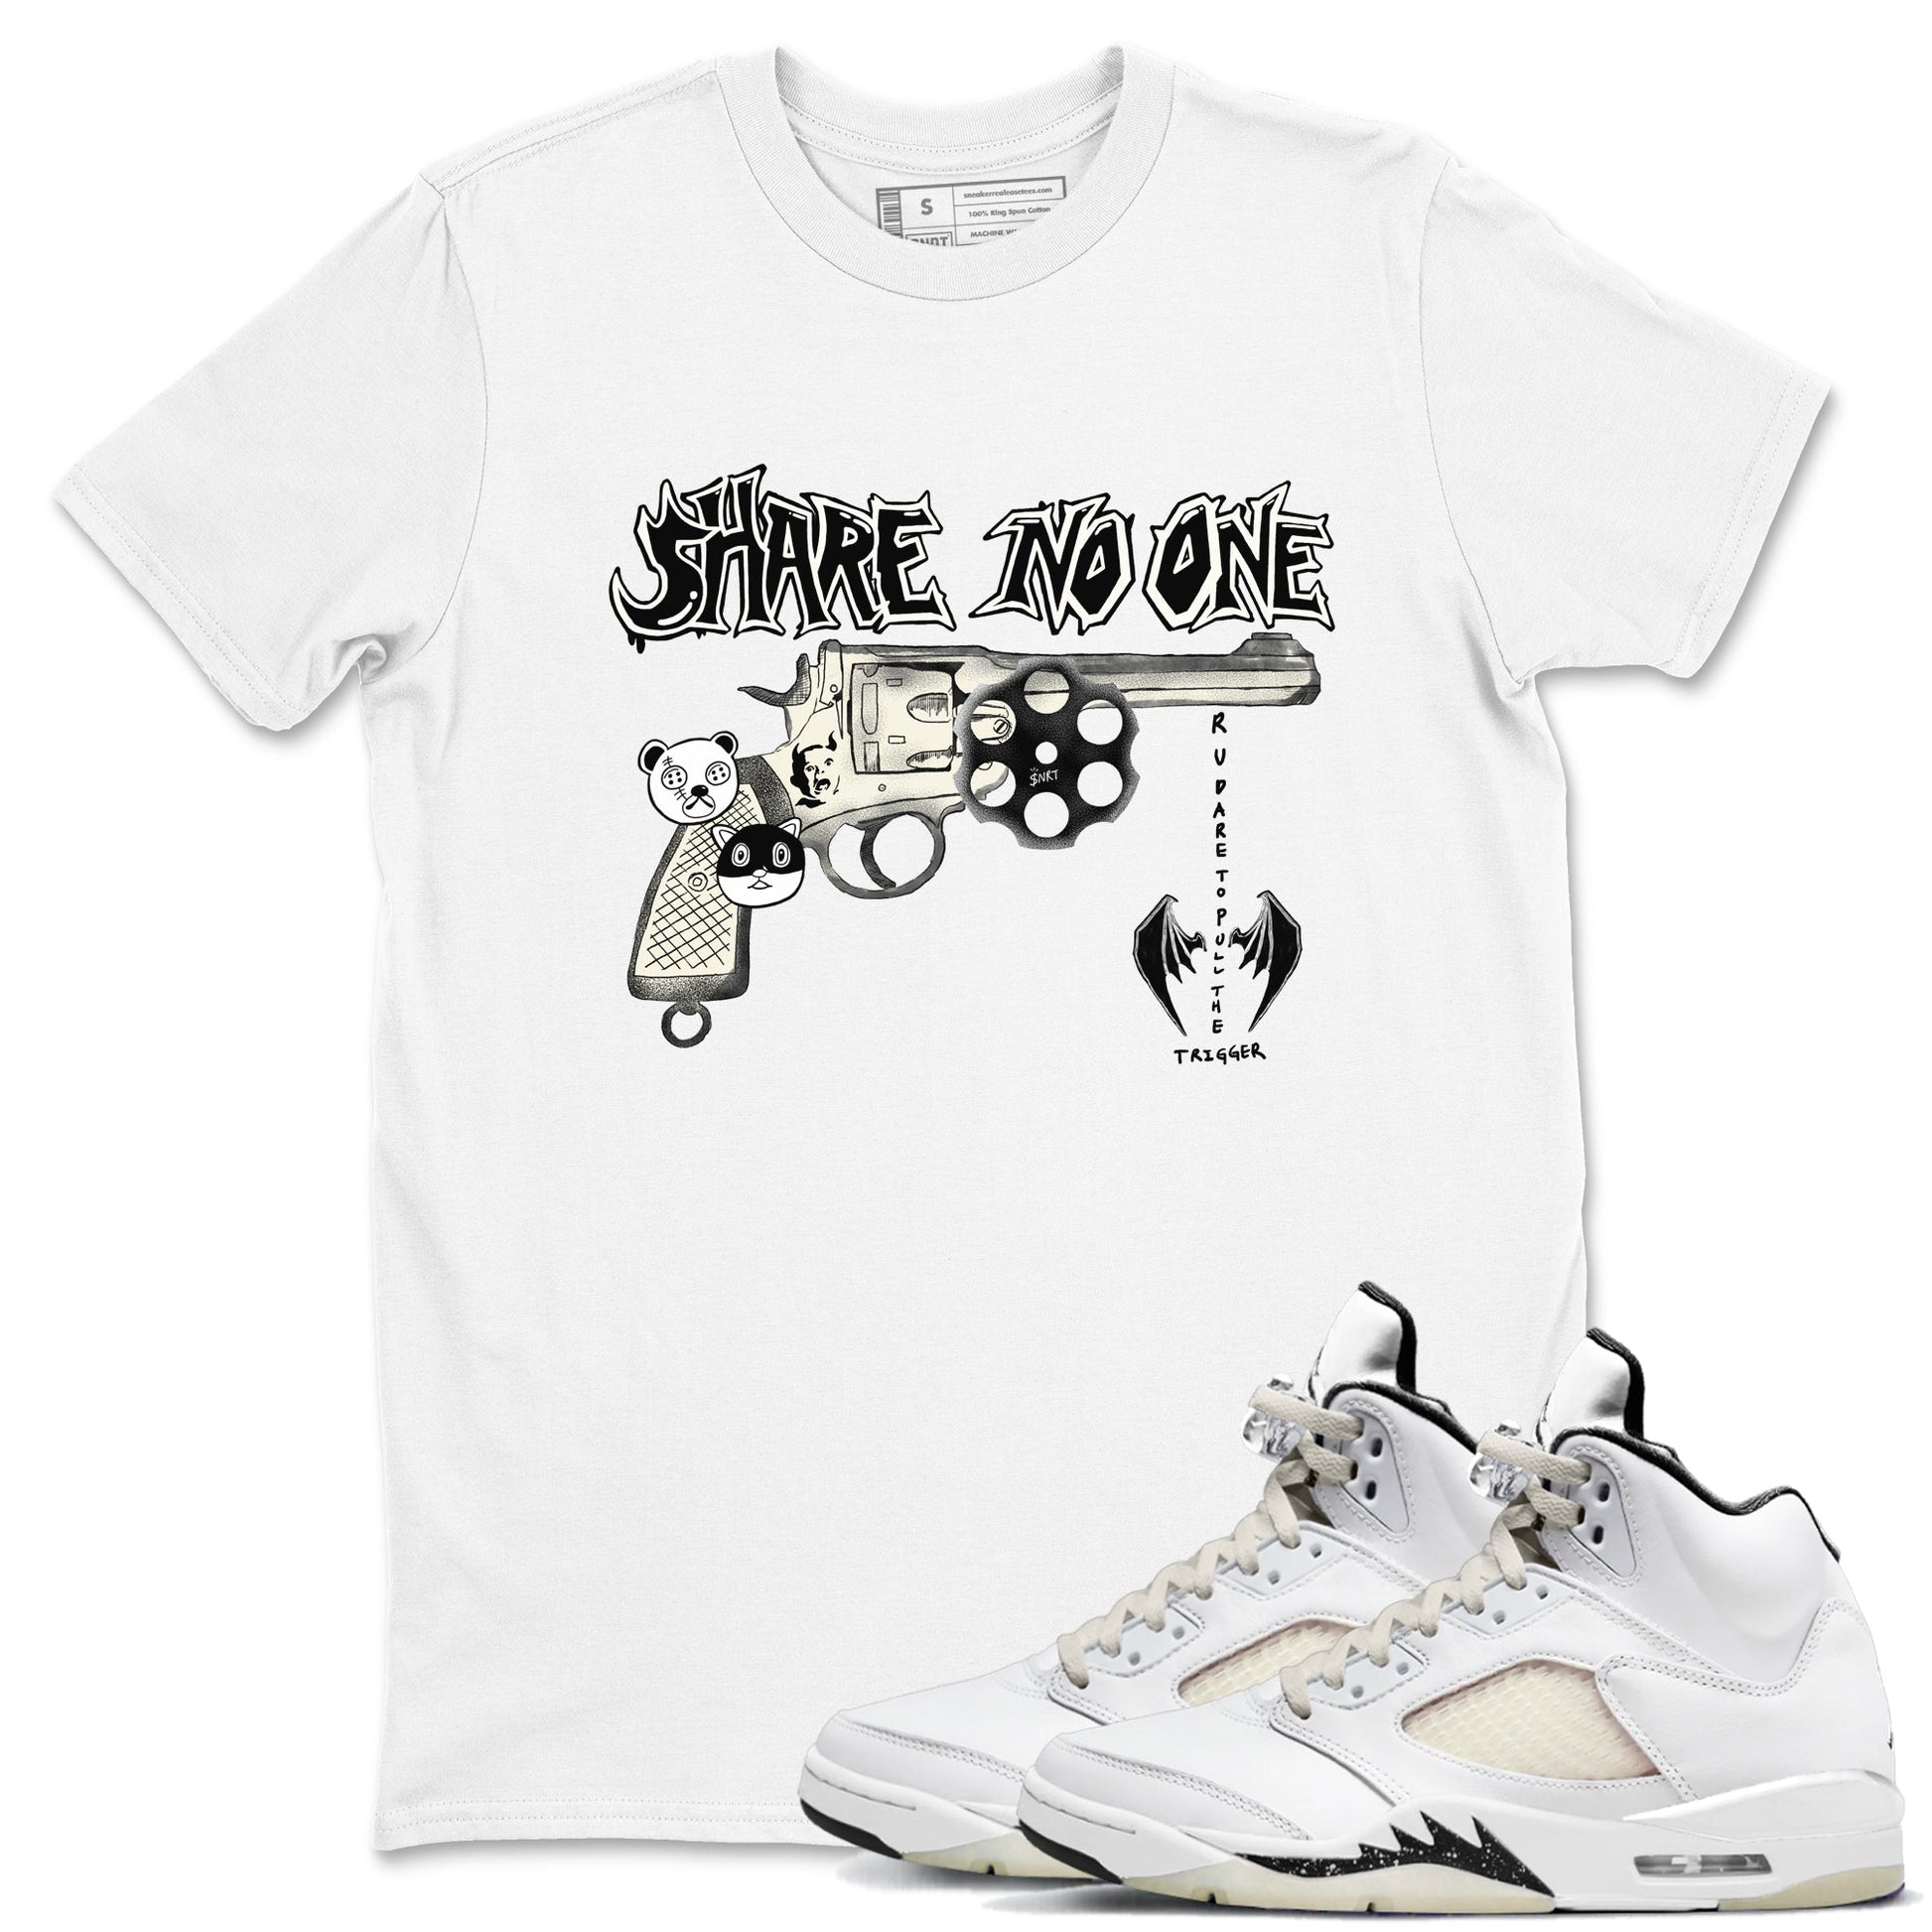 5s Sail shirt to match jordans Share No One sneaker tees Air Jordan 5 Sail SNRT Sneaker Release Tees unisex cotton White 1 crew neck shirt